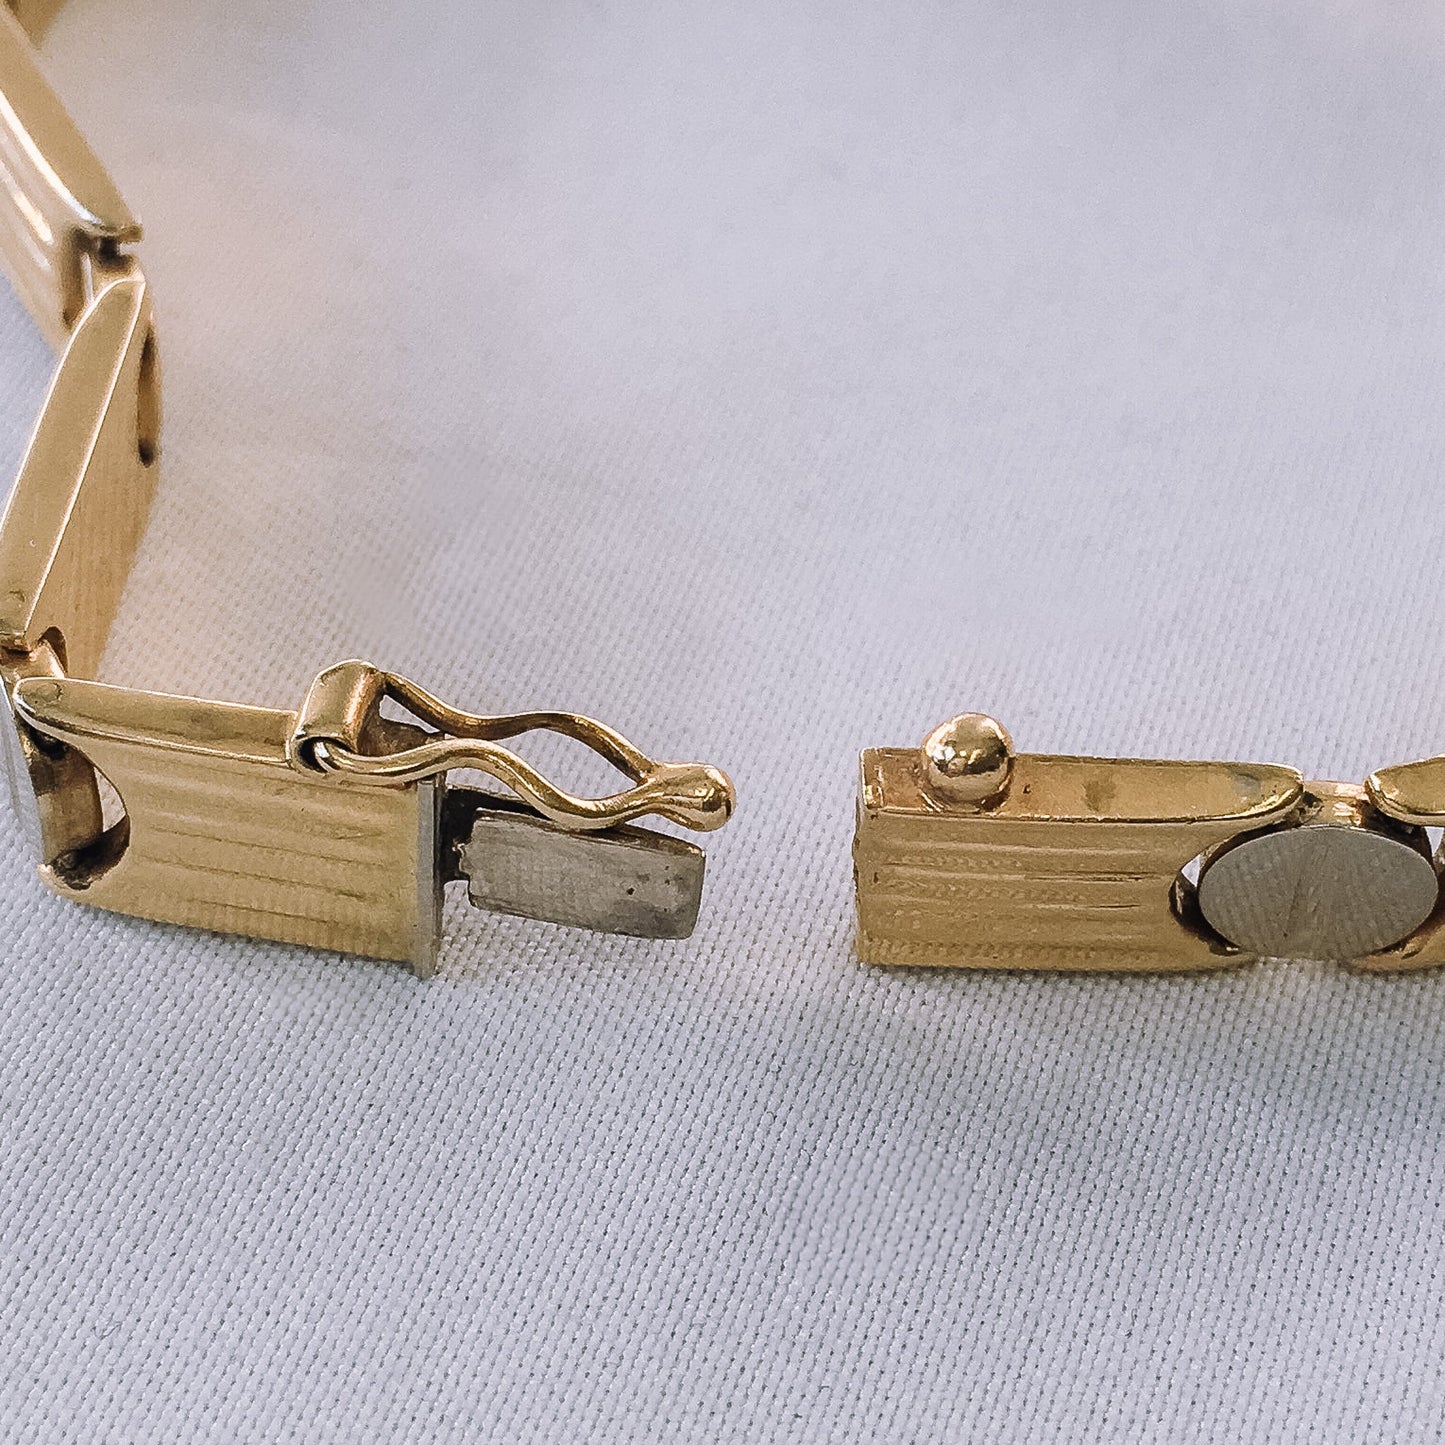 Vintage Italy Screw-Top Gold Bracelet, Unknown Carat, likely 14k, Two Tone Bracelet